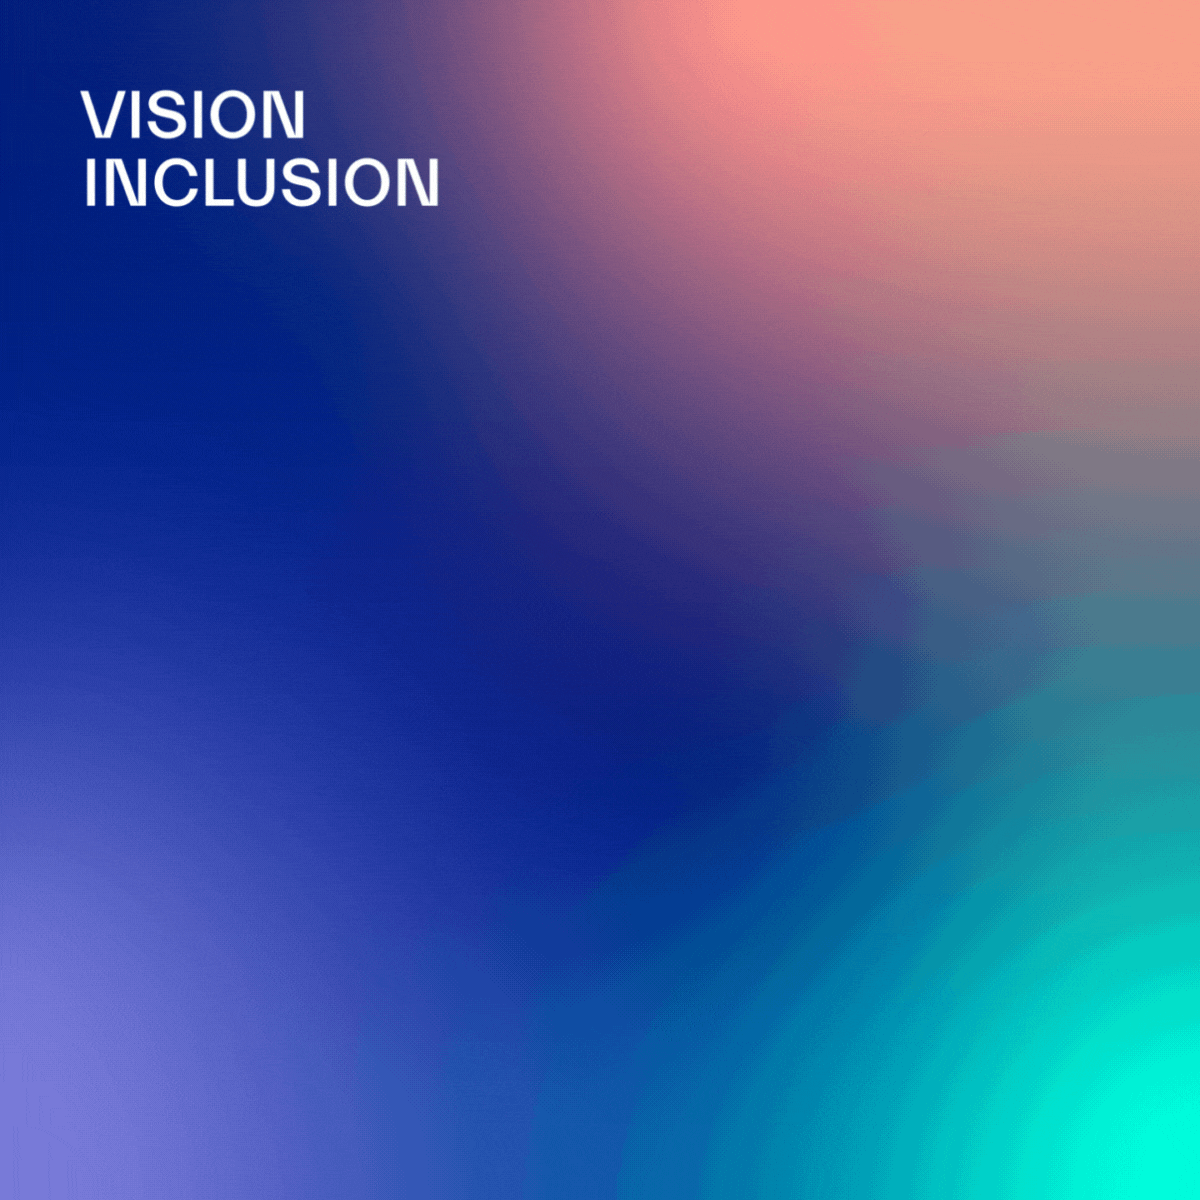 Vision inclusion